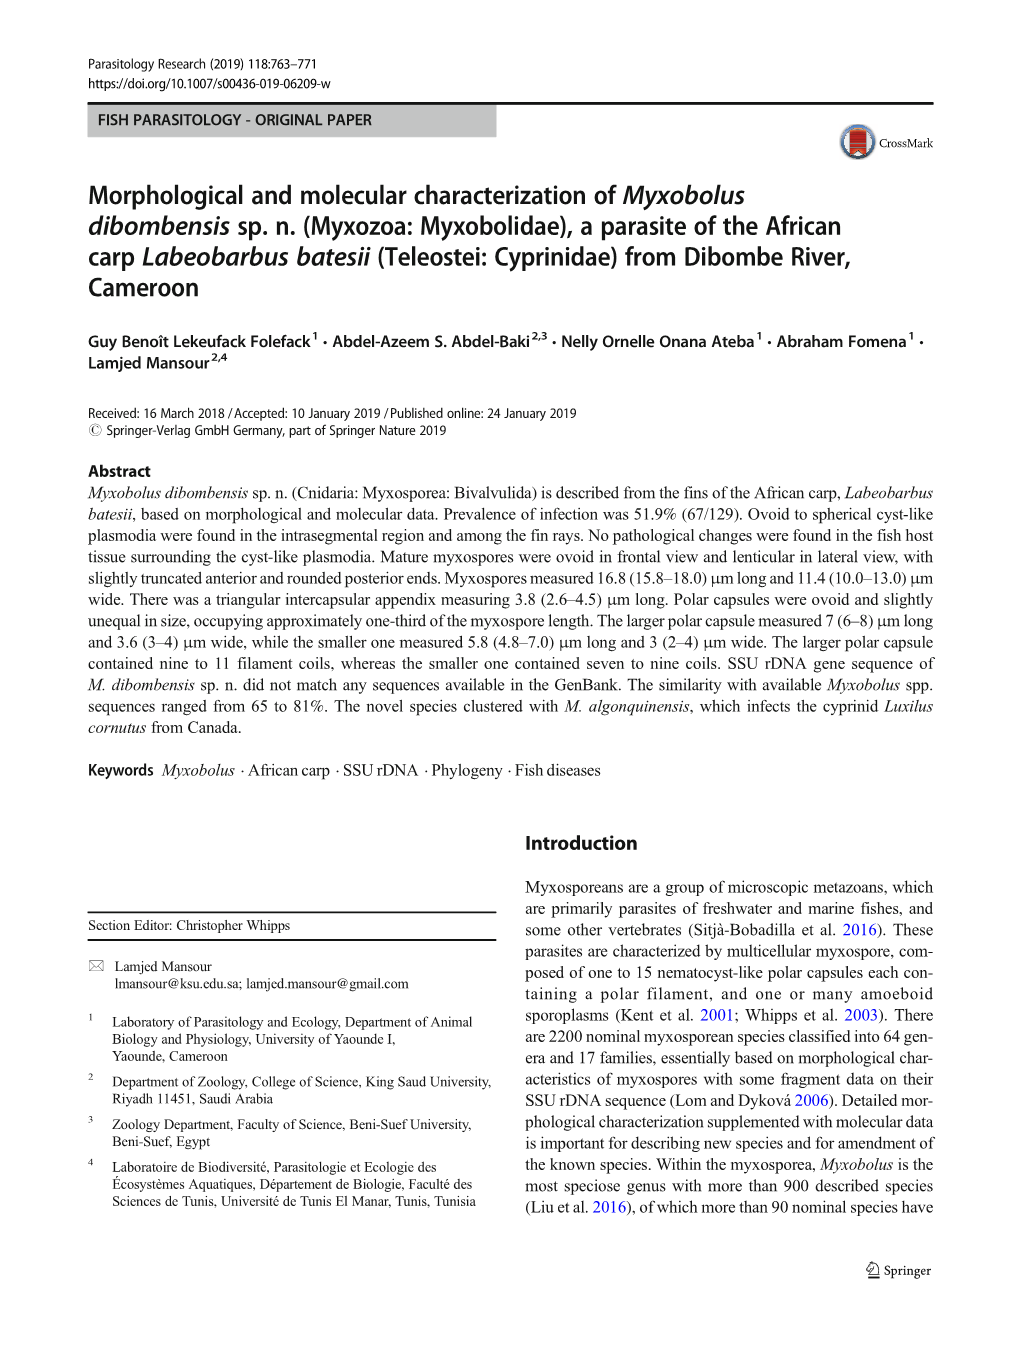 (Myxozoa: Myxobolidae), a Parasite of the African Carp Labeobarbus Batesii (Teleostei: Cyprinidae) from Dibombe River, Cameroon